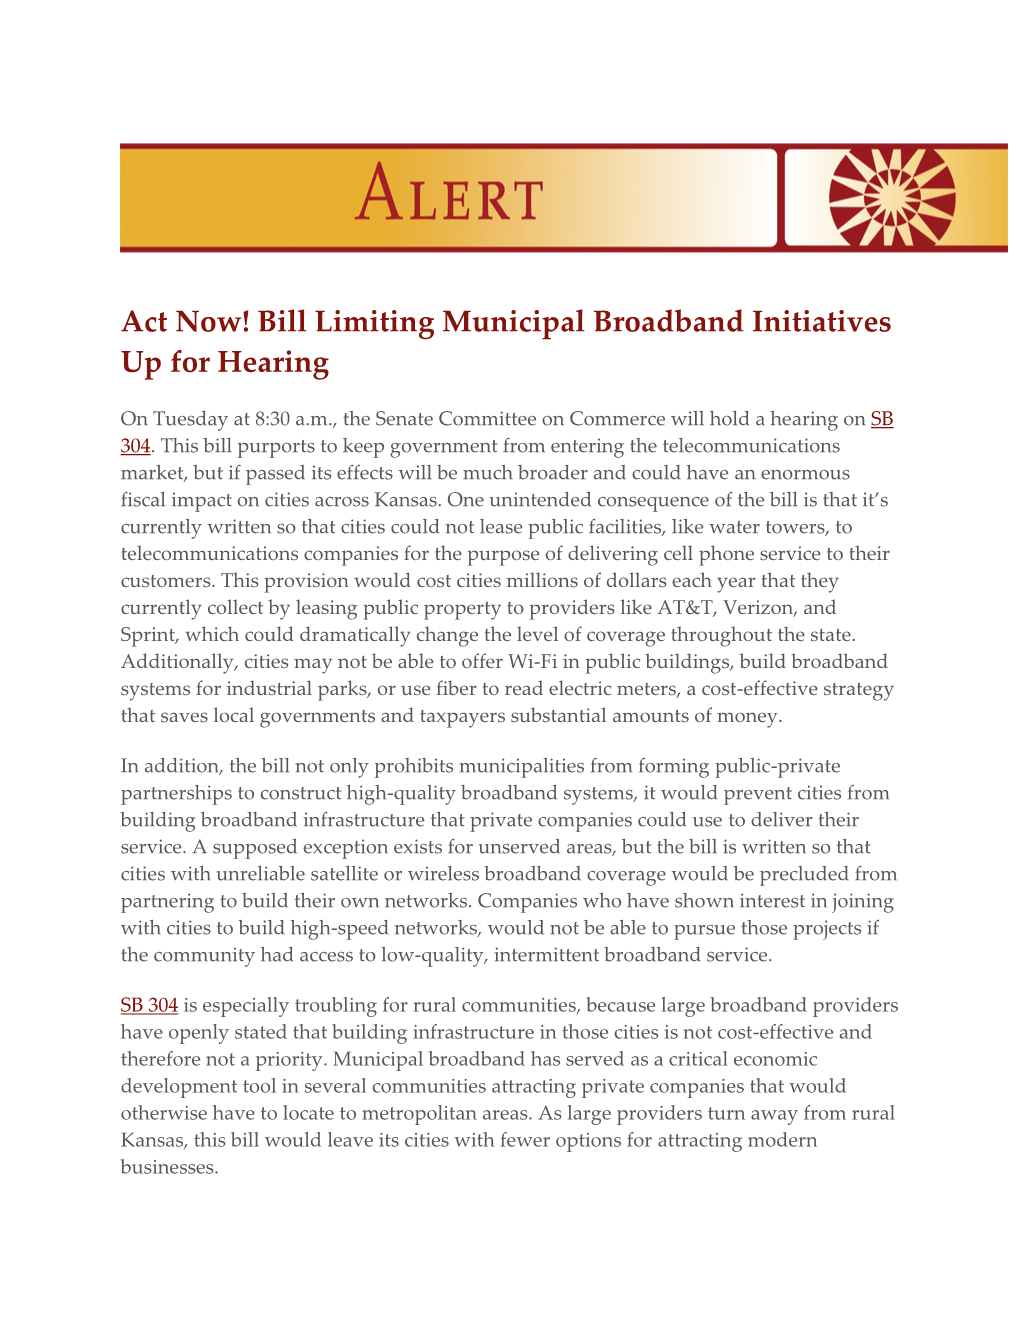 Act Now! Bill Limiting Municipal Broadband Initiatives up for Hearing